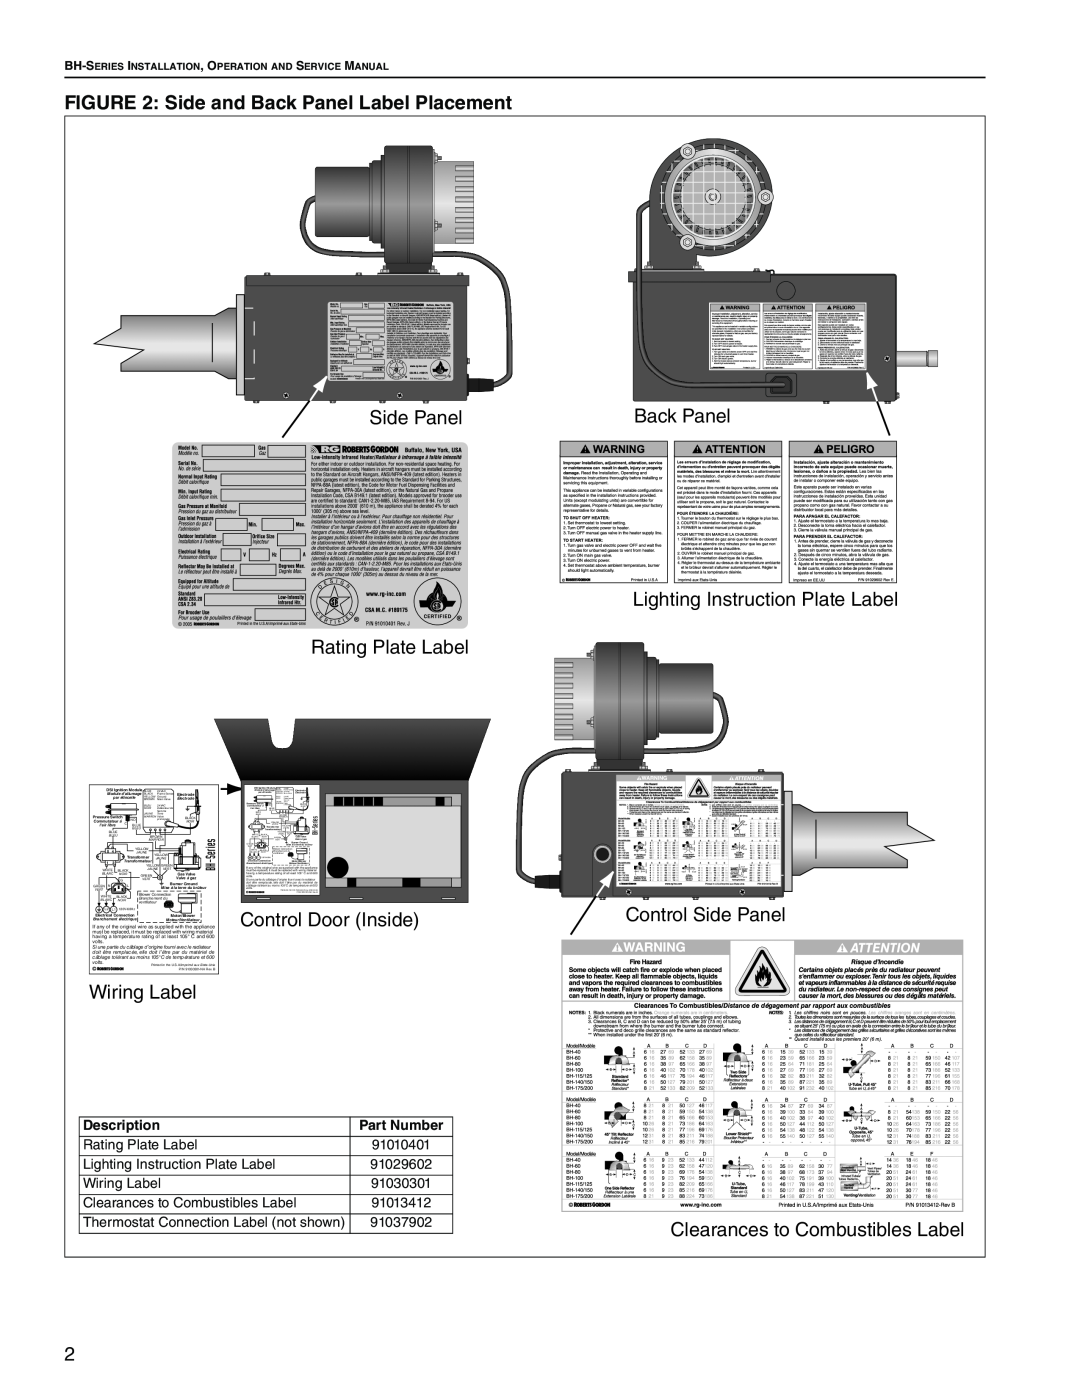 Roberts Gorden BH-80 Description, Part Number, Thermostat Connection Label not shown, Series, DSI Ignition Module BLUE 